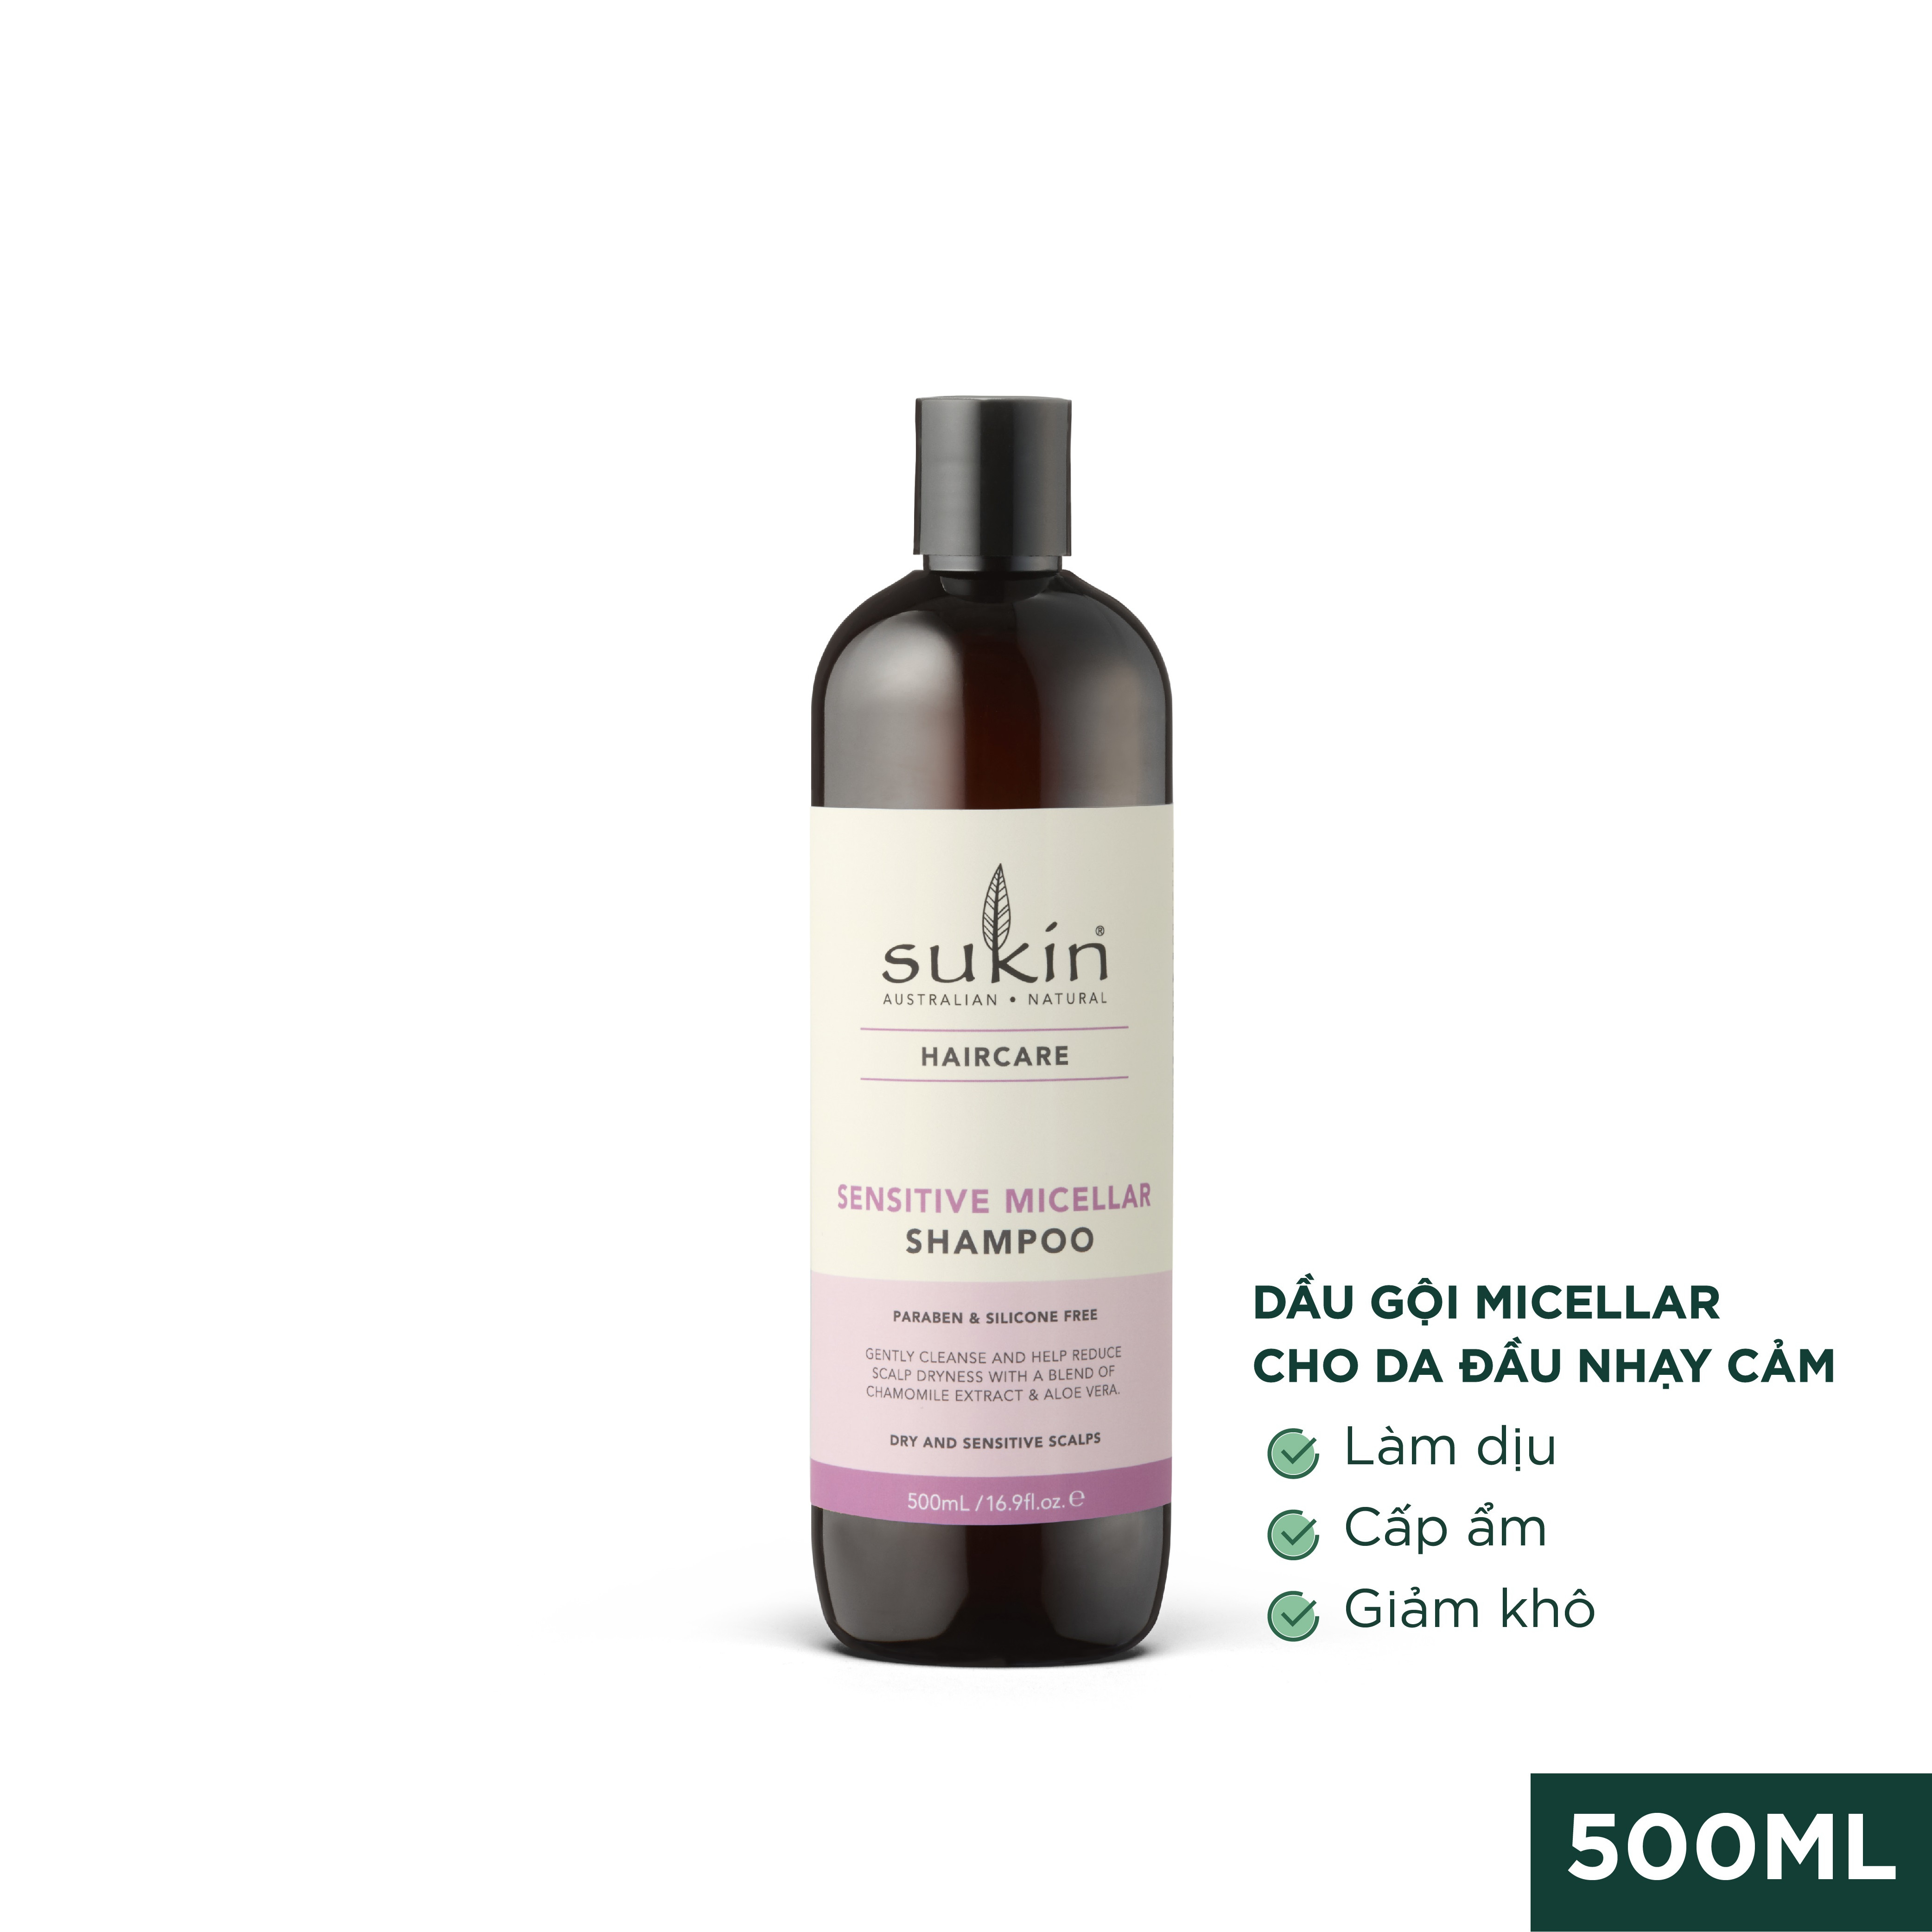 Dầu Gội Micellar Cho Da Đầu Nhạy Cảm Sukin Sensitive Micellar Shampoo 500ml